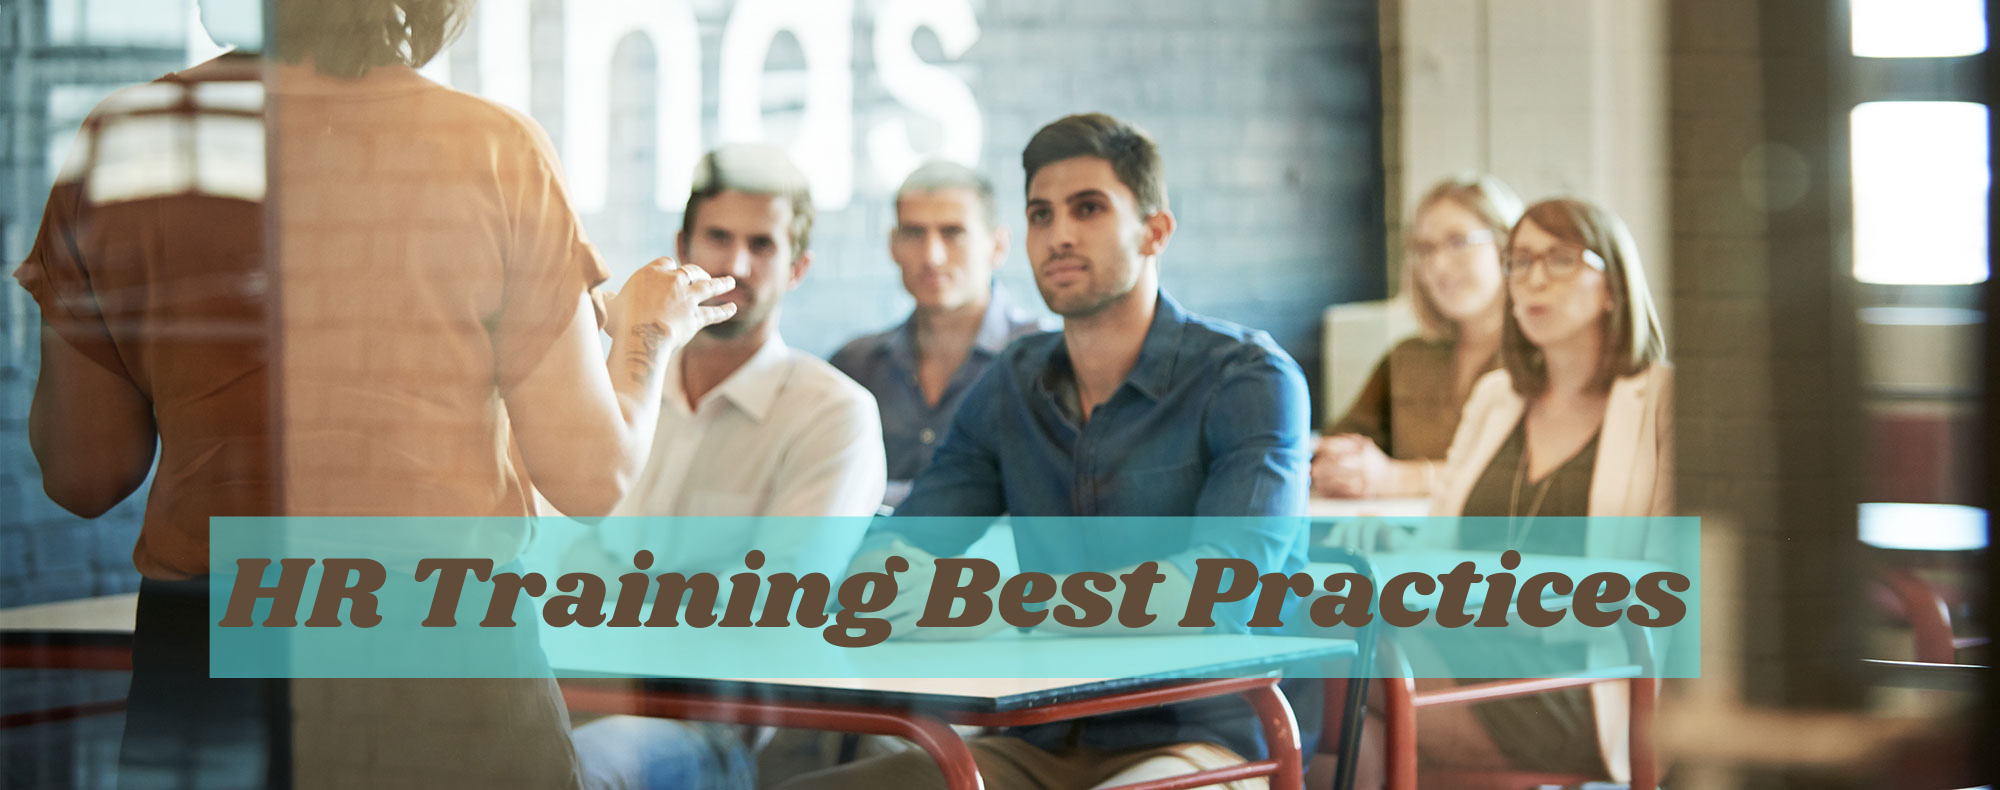 HR Training Best Practices